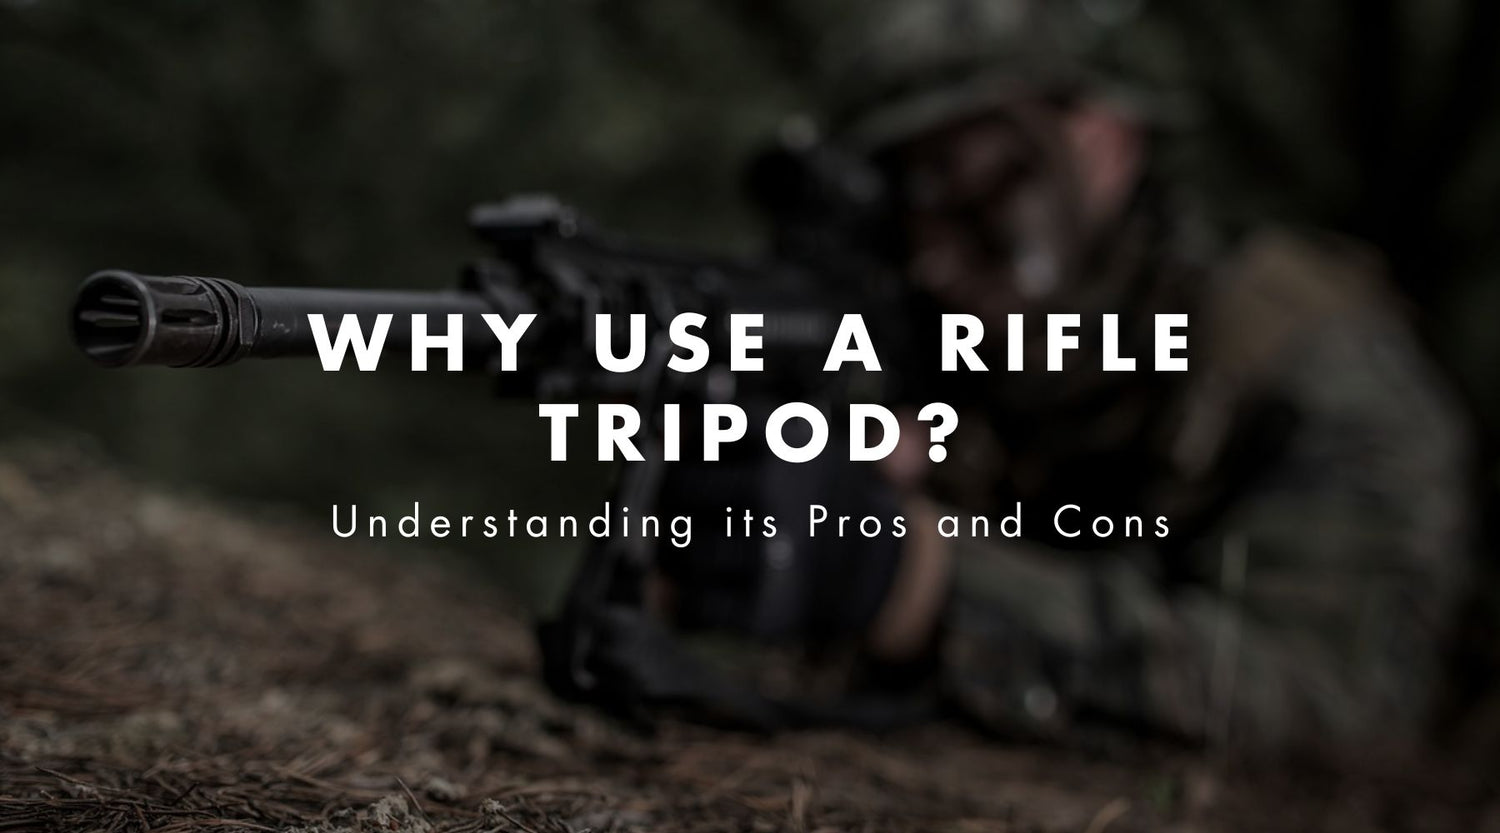 Why use a rifle tripod? | Rifle photo by Tprzem